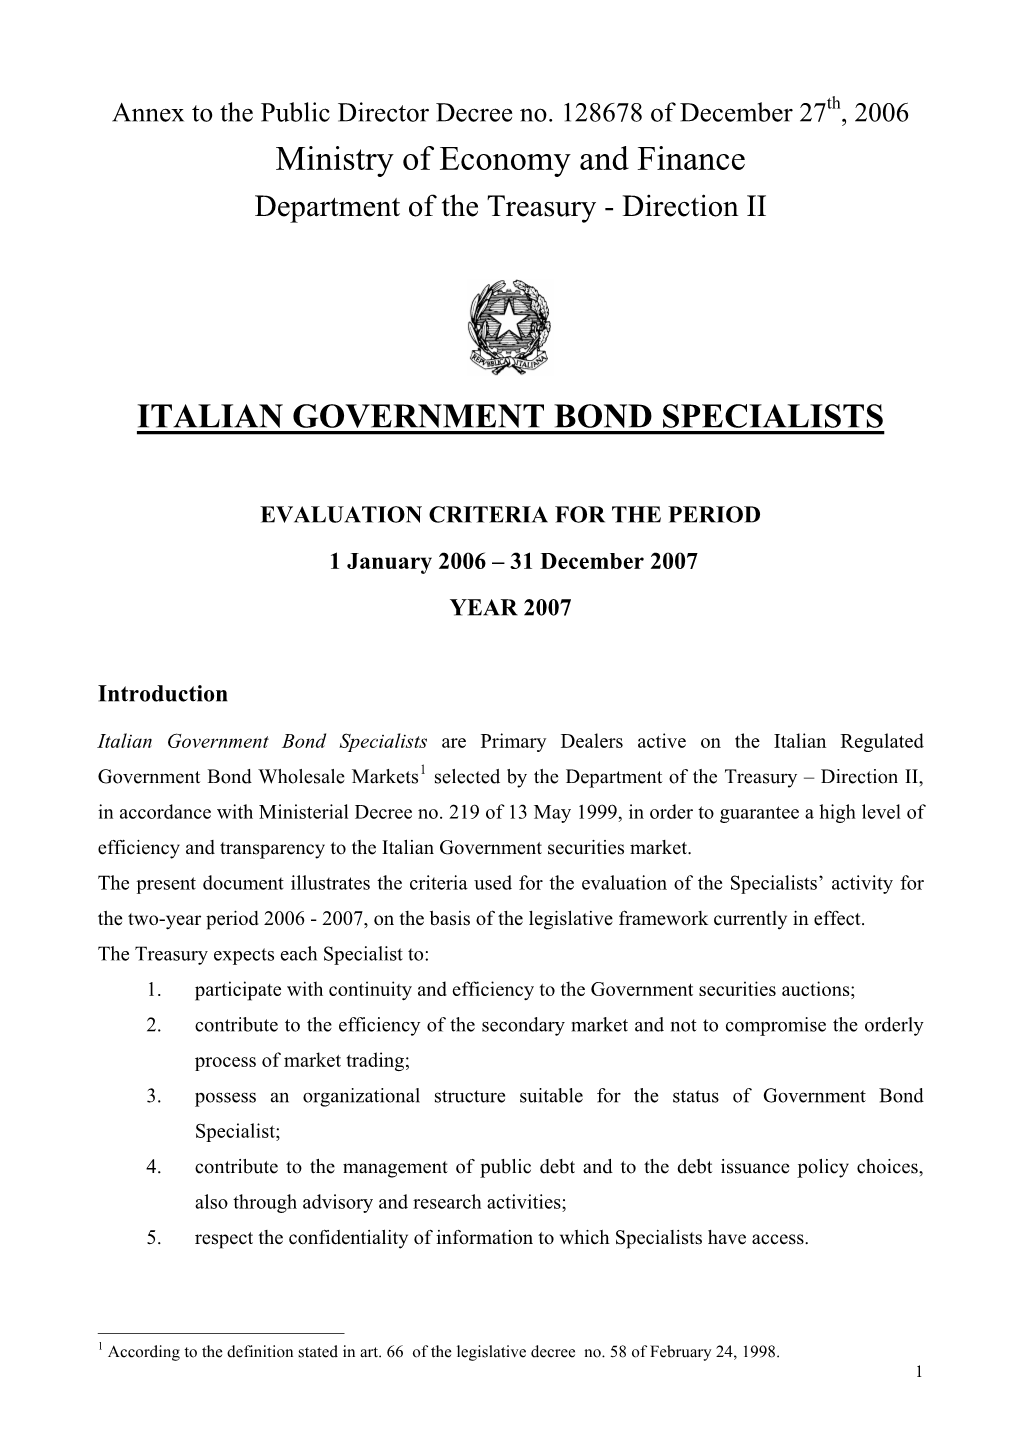 Italian Government Bond Specialists